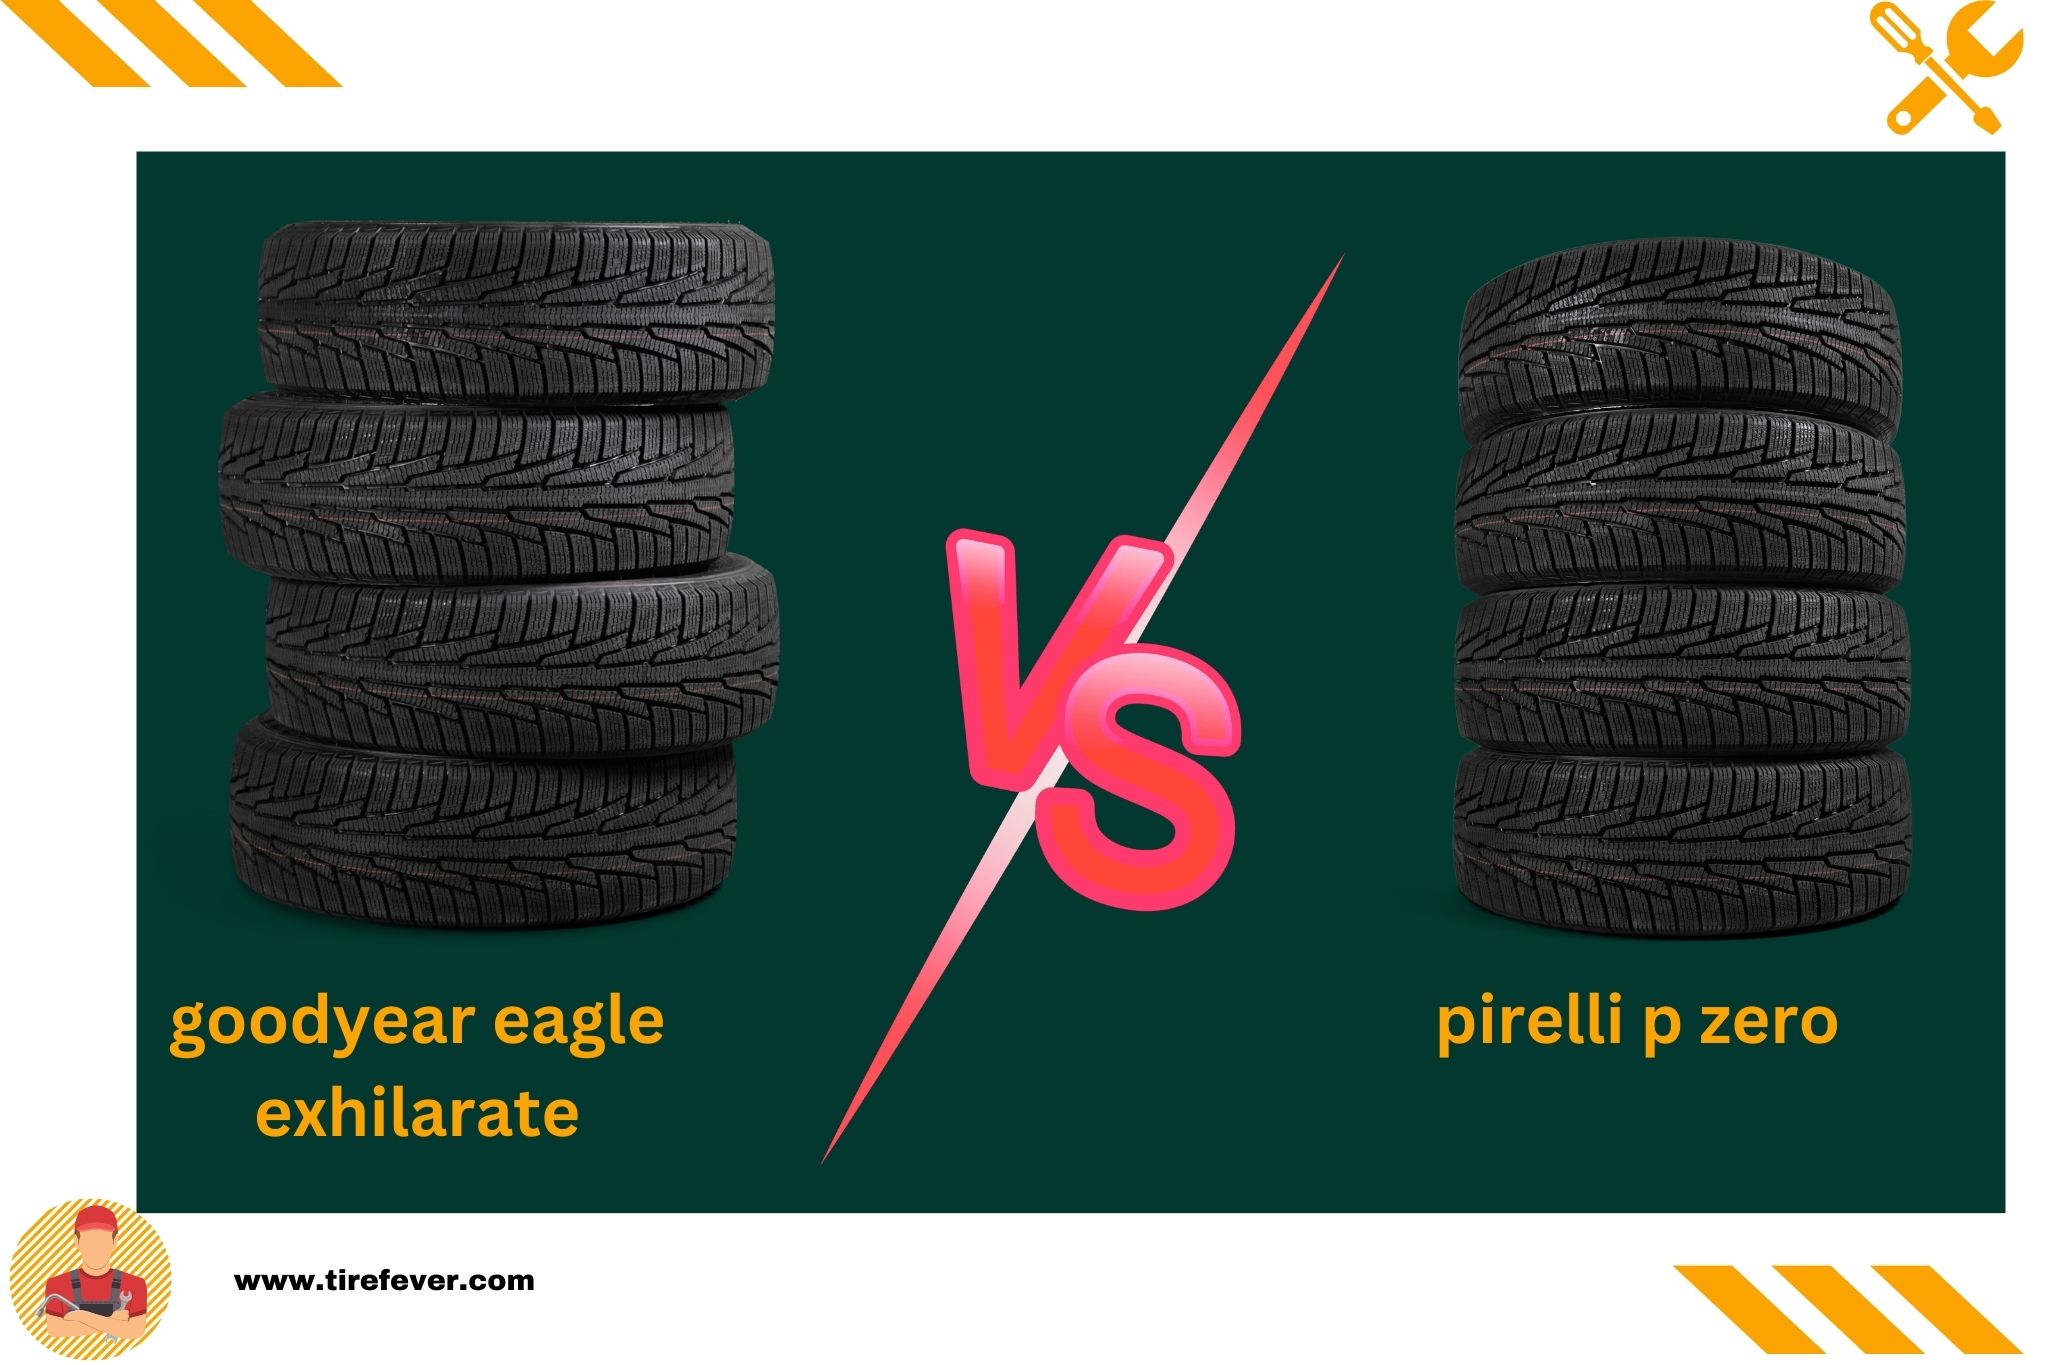 goodyear eagle exhilarate vs pirelli p zero